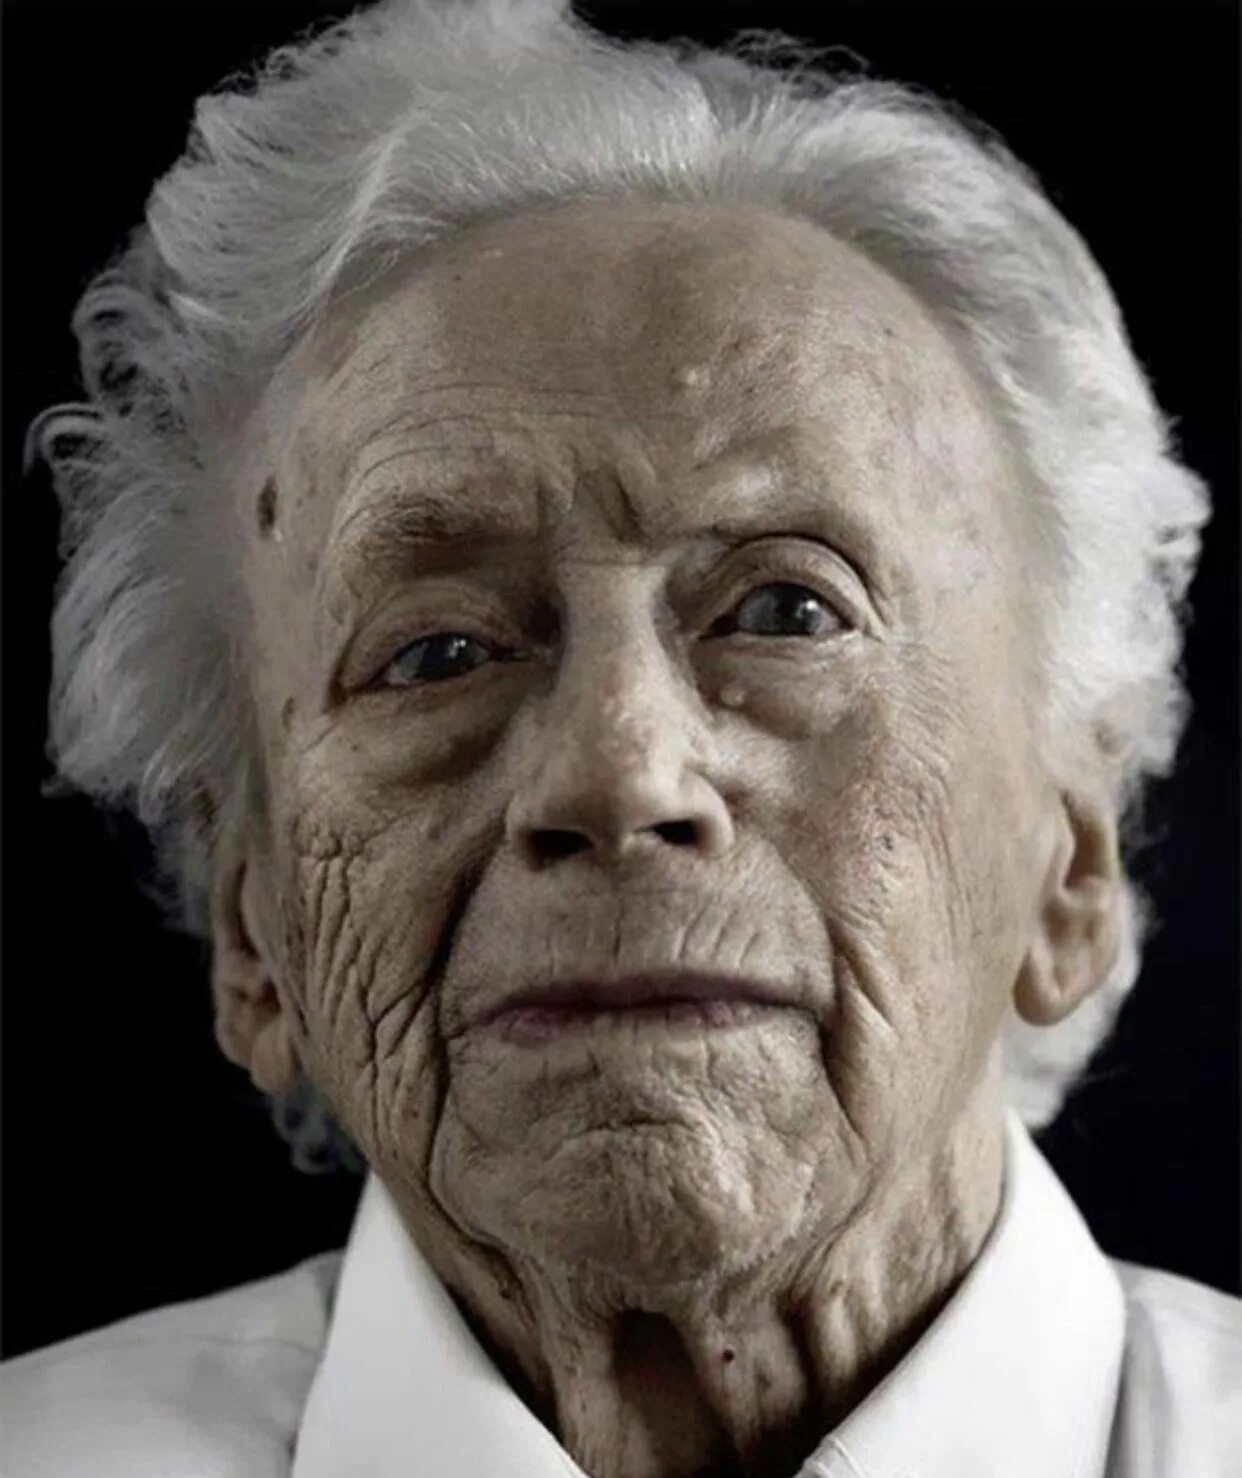 90 летний мужчина